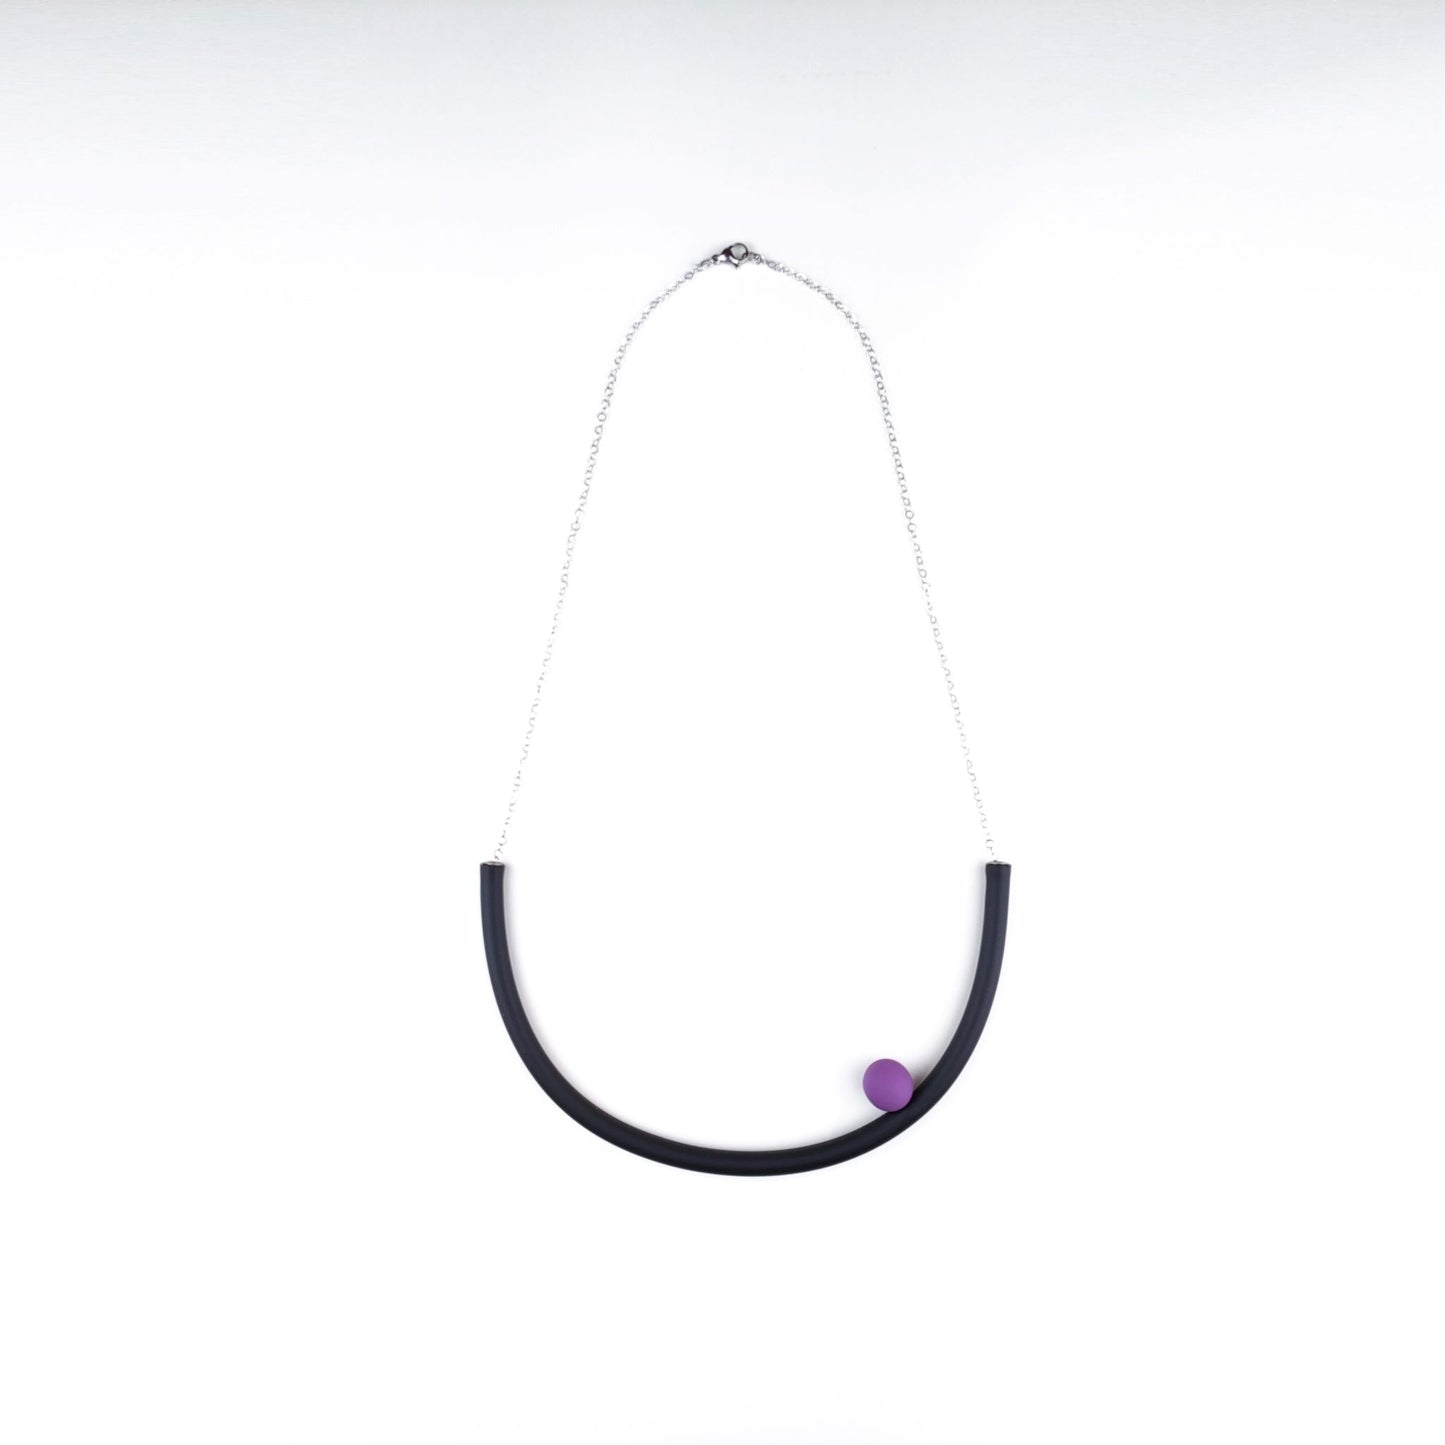 BILICO round necklace - black / silver pearl